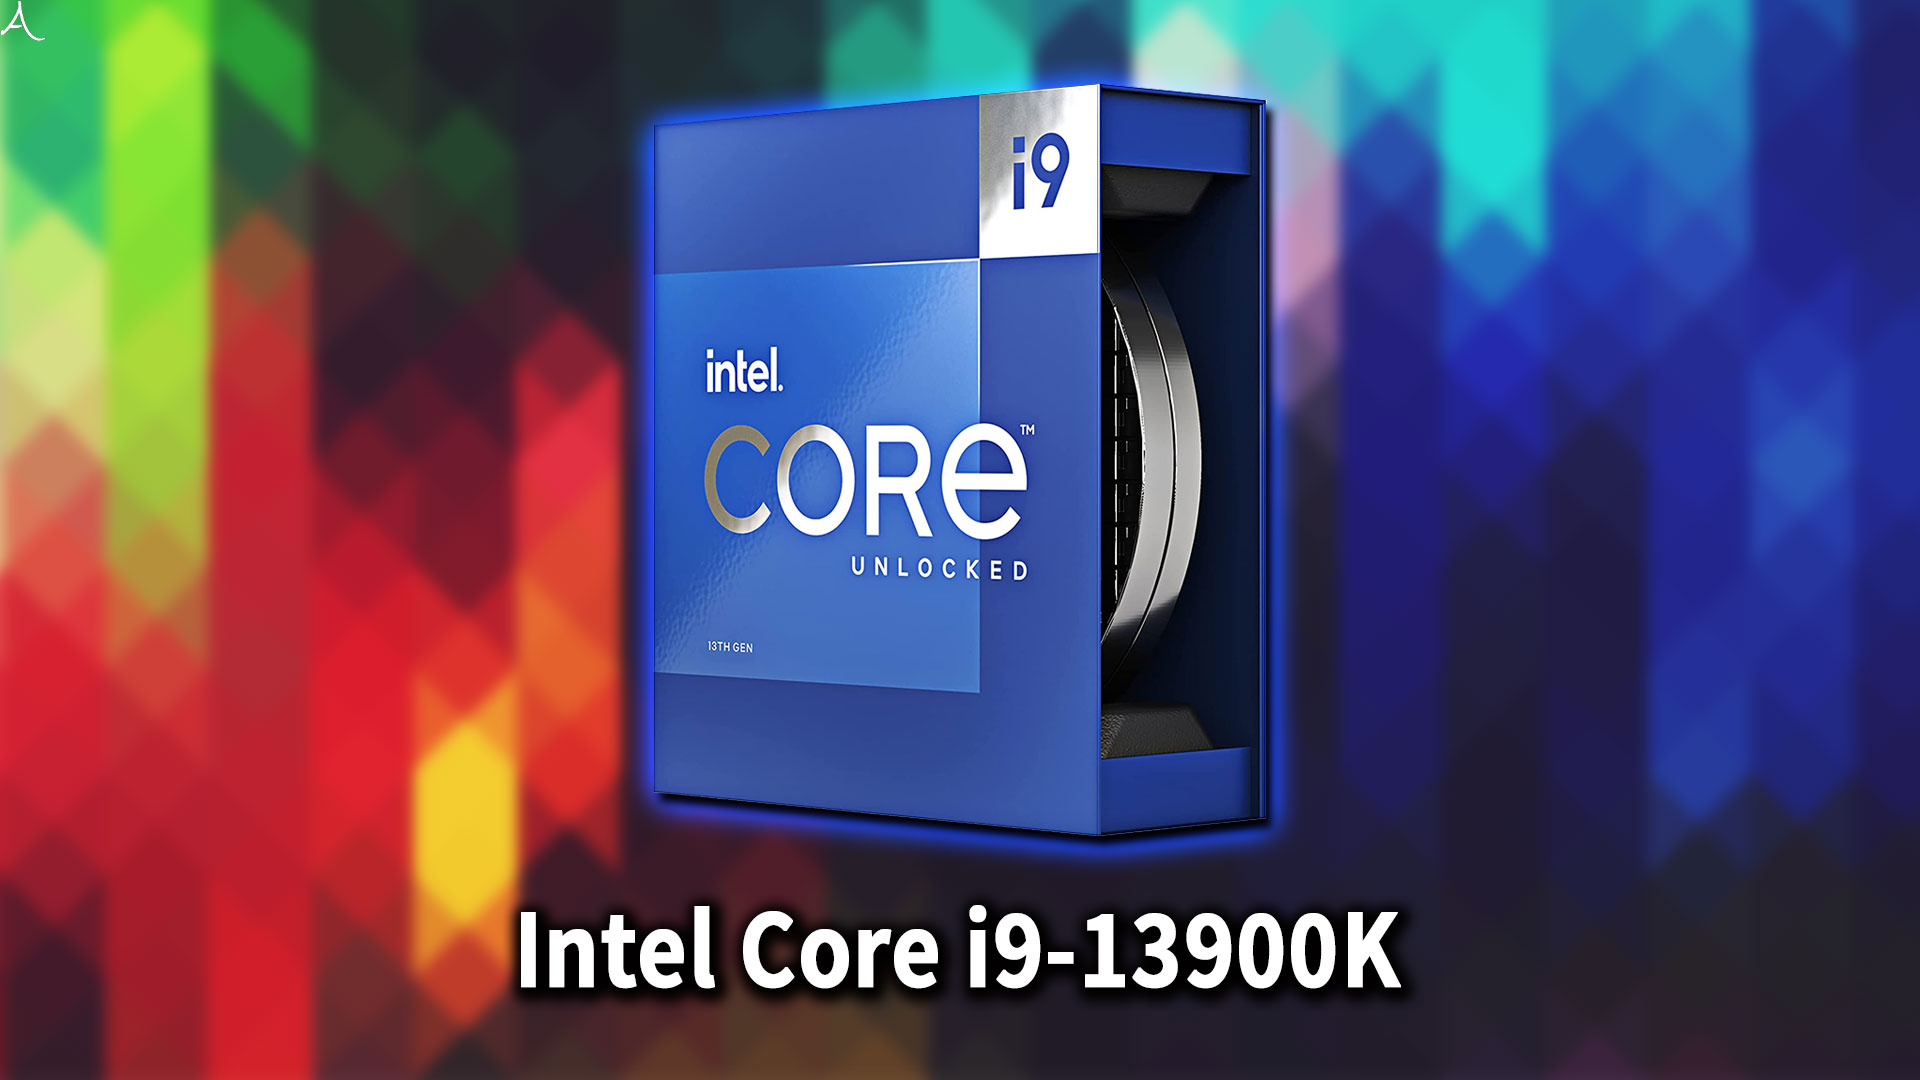 ｢Intel Core i9-13900K｣の消費電力は？おすすめの電源容量はどれくらい？